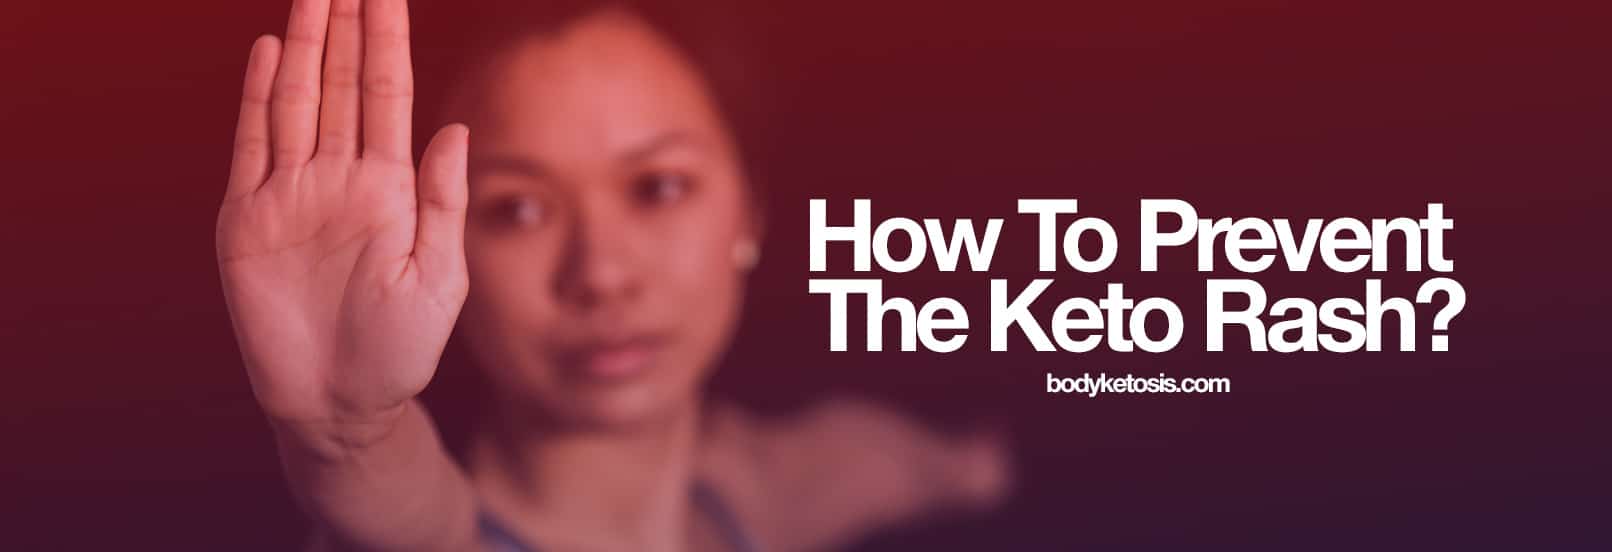 how to prevent the keto rash